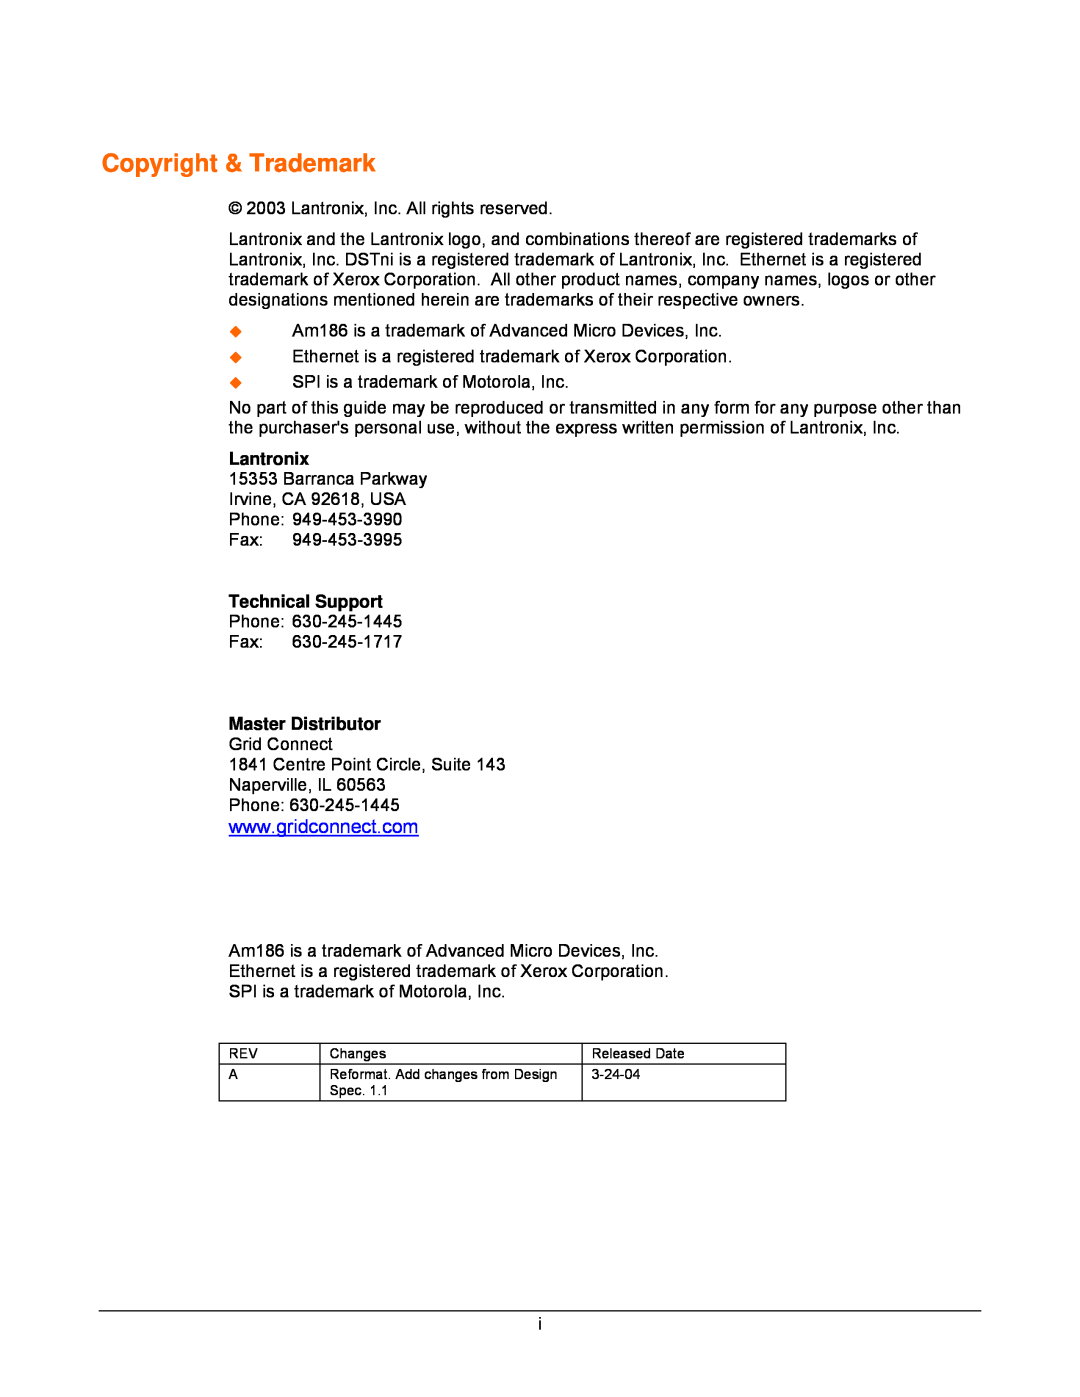 Lantronix DSTni-EX manual Copyright & Trademark, Lantronix, Technical Support, Master Distributor 